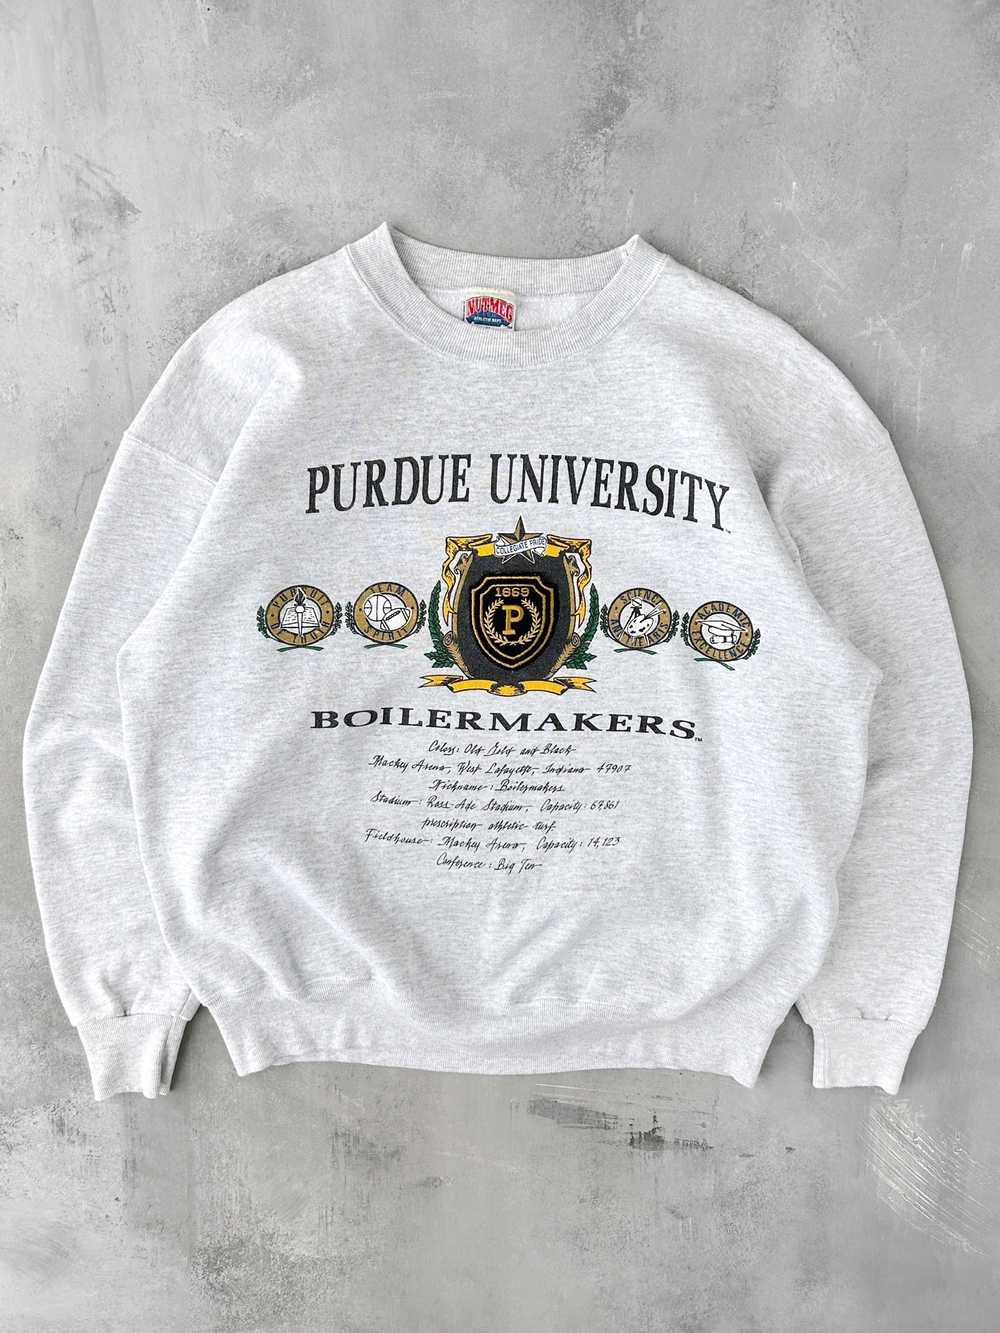 Purdue University Sweatshirt 90's - XL - image 1